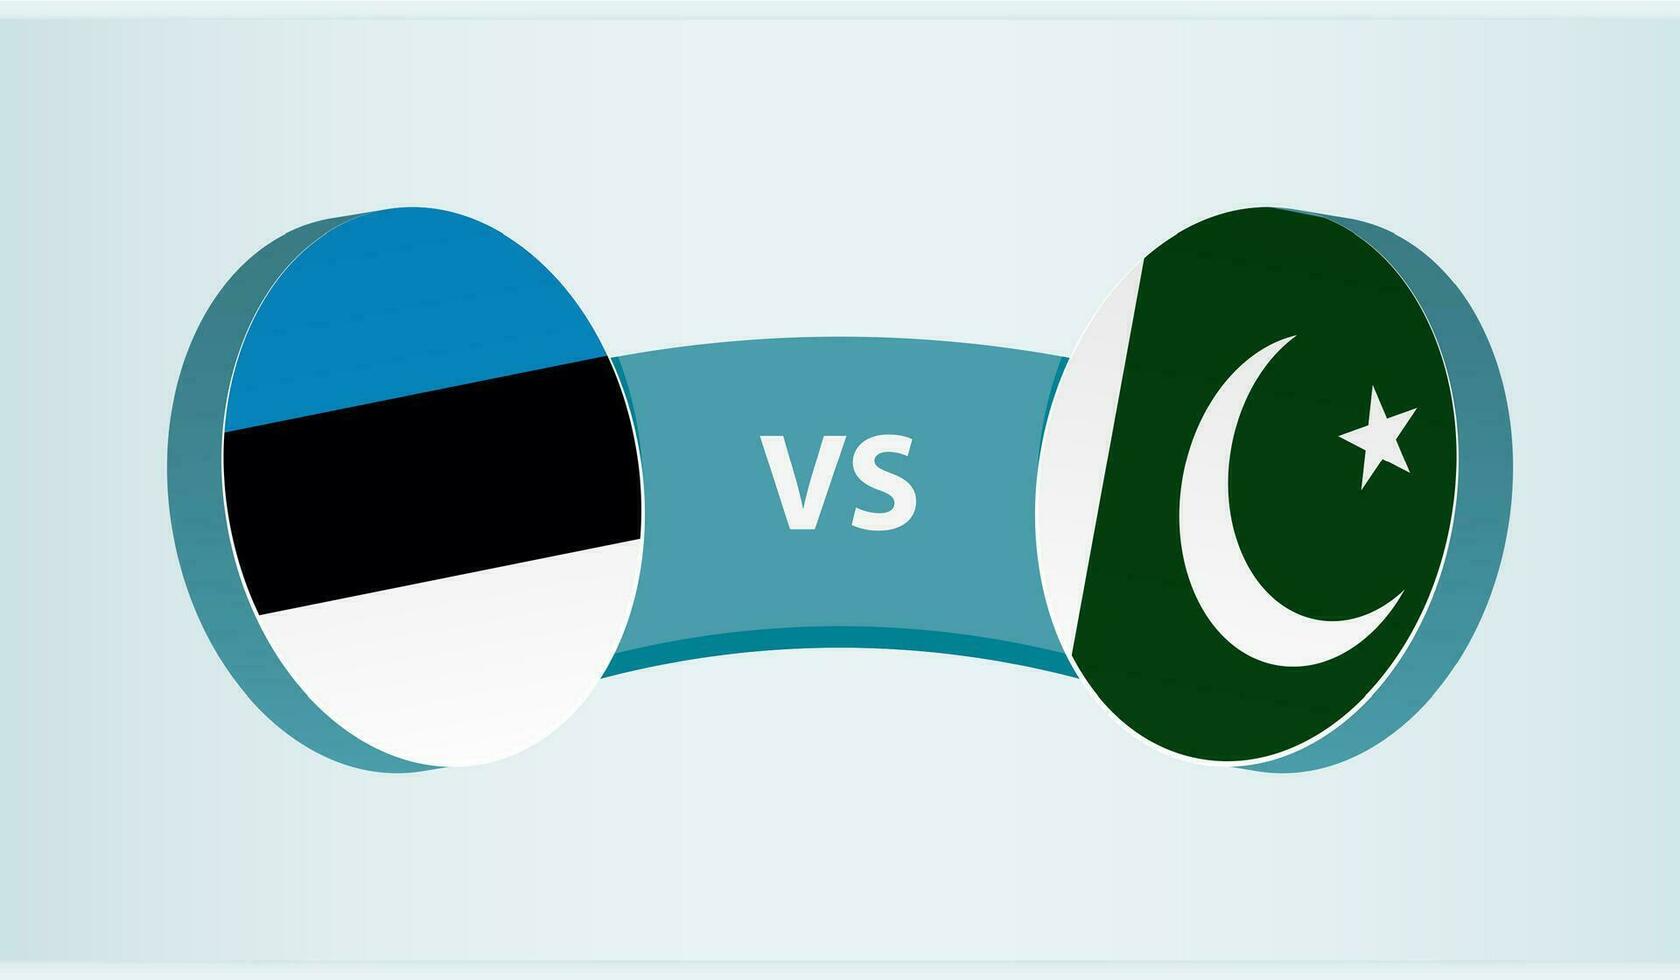 Estonia versus Pakistan, team sports competition concept. vector